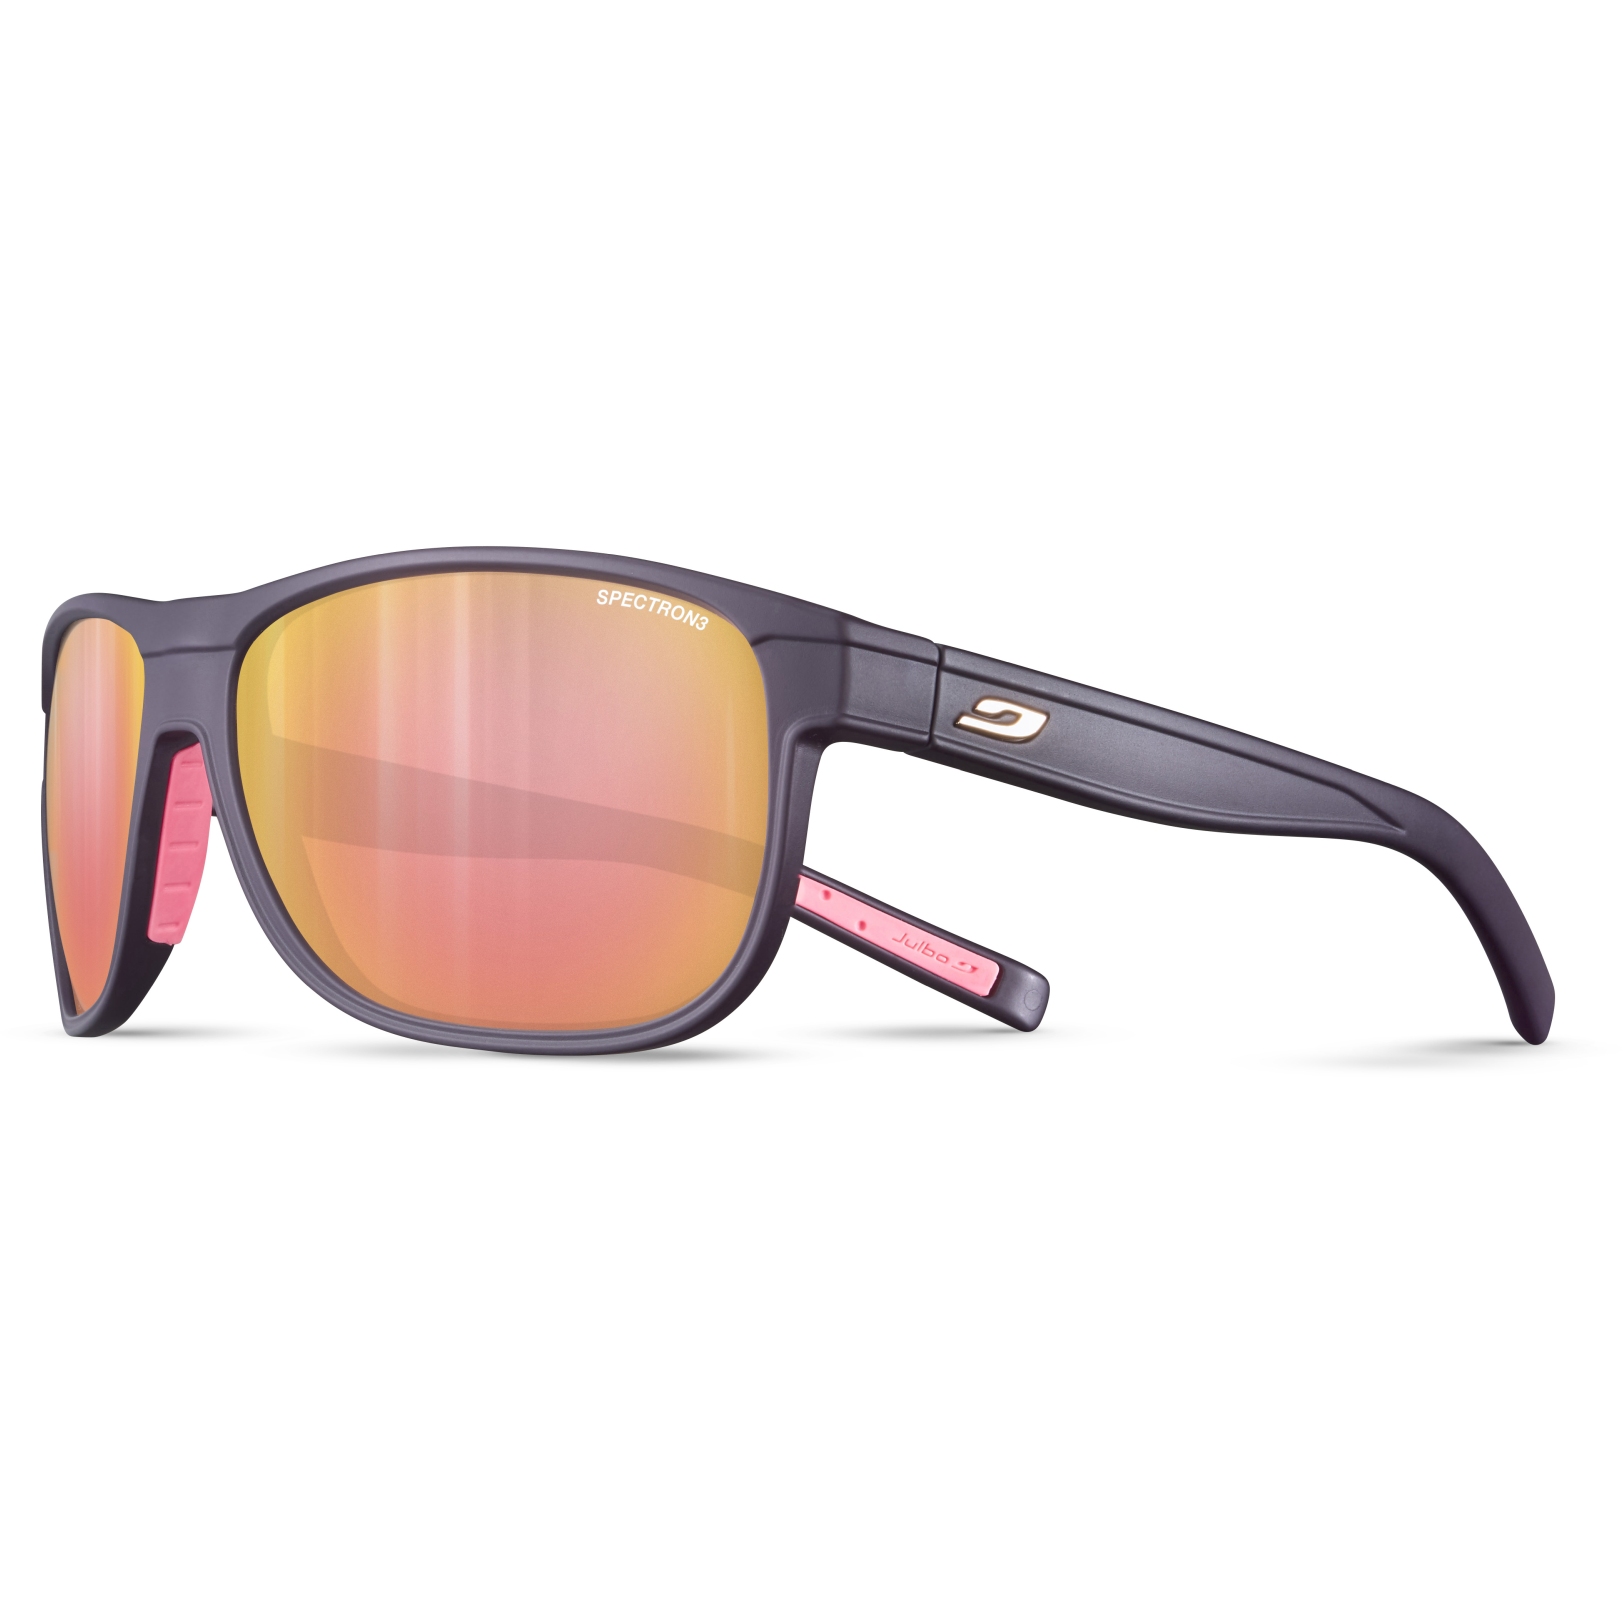 Productfoto van Julbo Renegade M Spectron 3CF Sunglasses - Violet / Pink